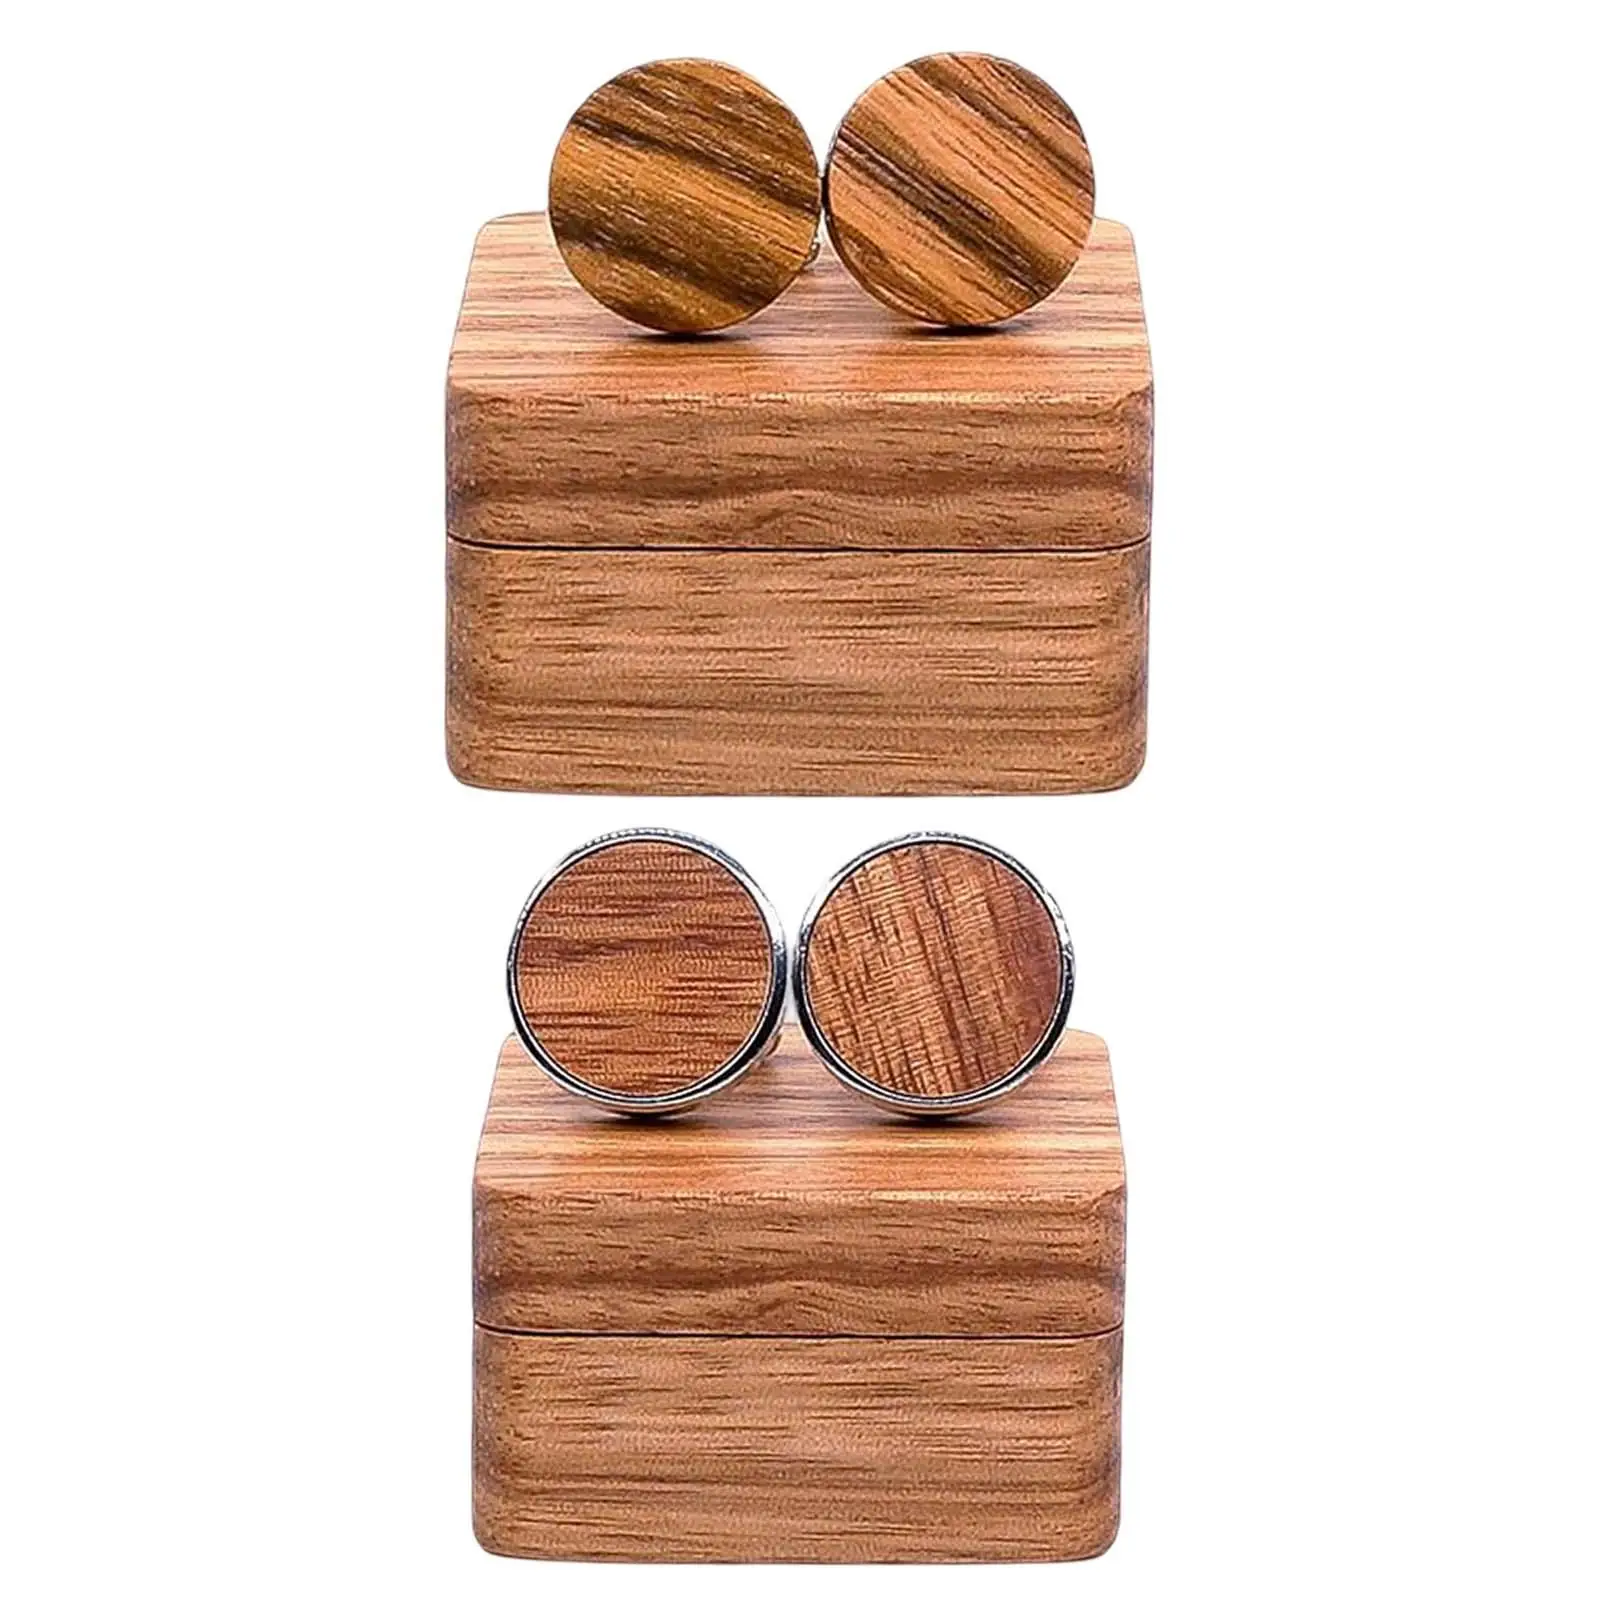 Rustic Cufflinks +Wood Gift Box Handsome Cuff Links for Birthday Wedding Anniversary Husband Gifts